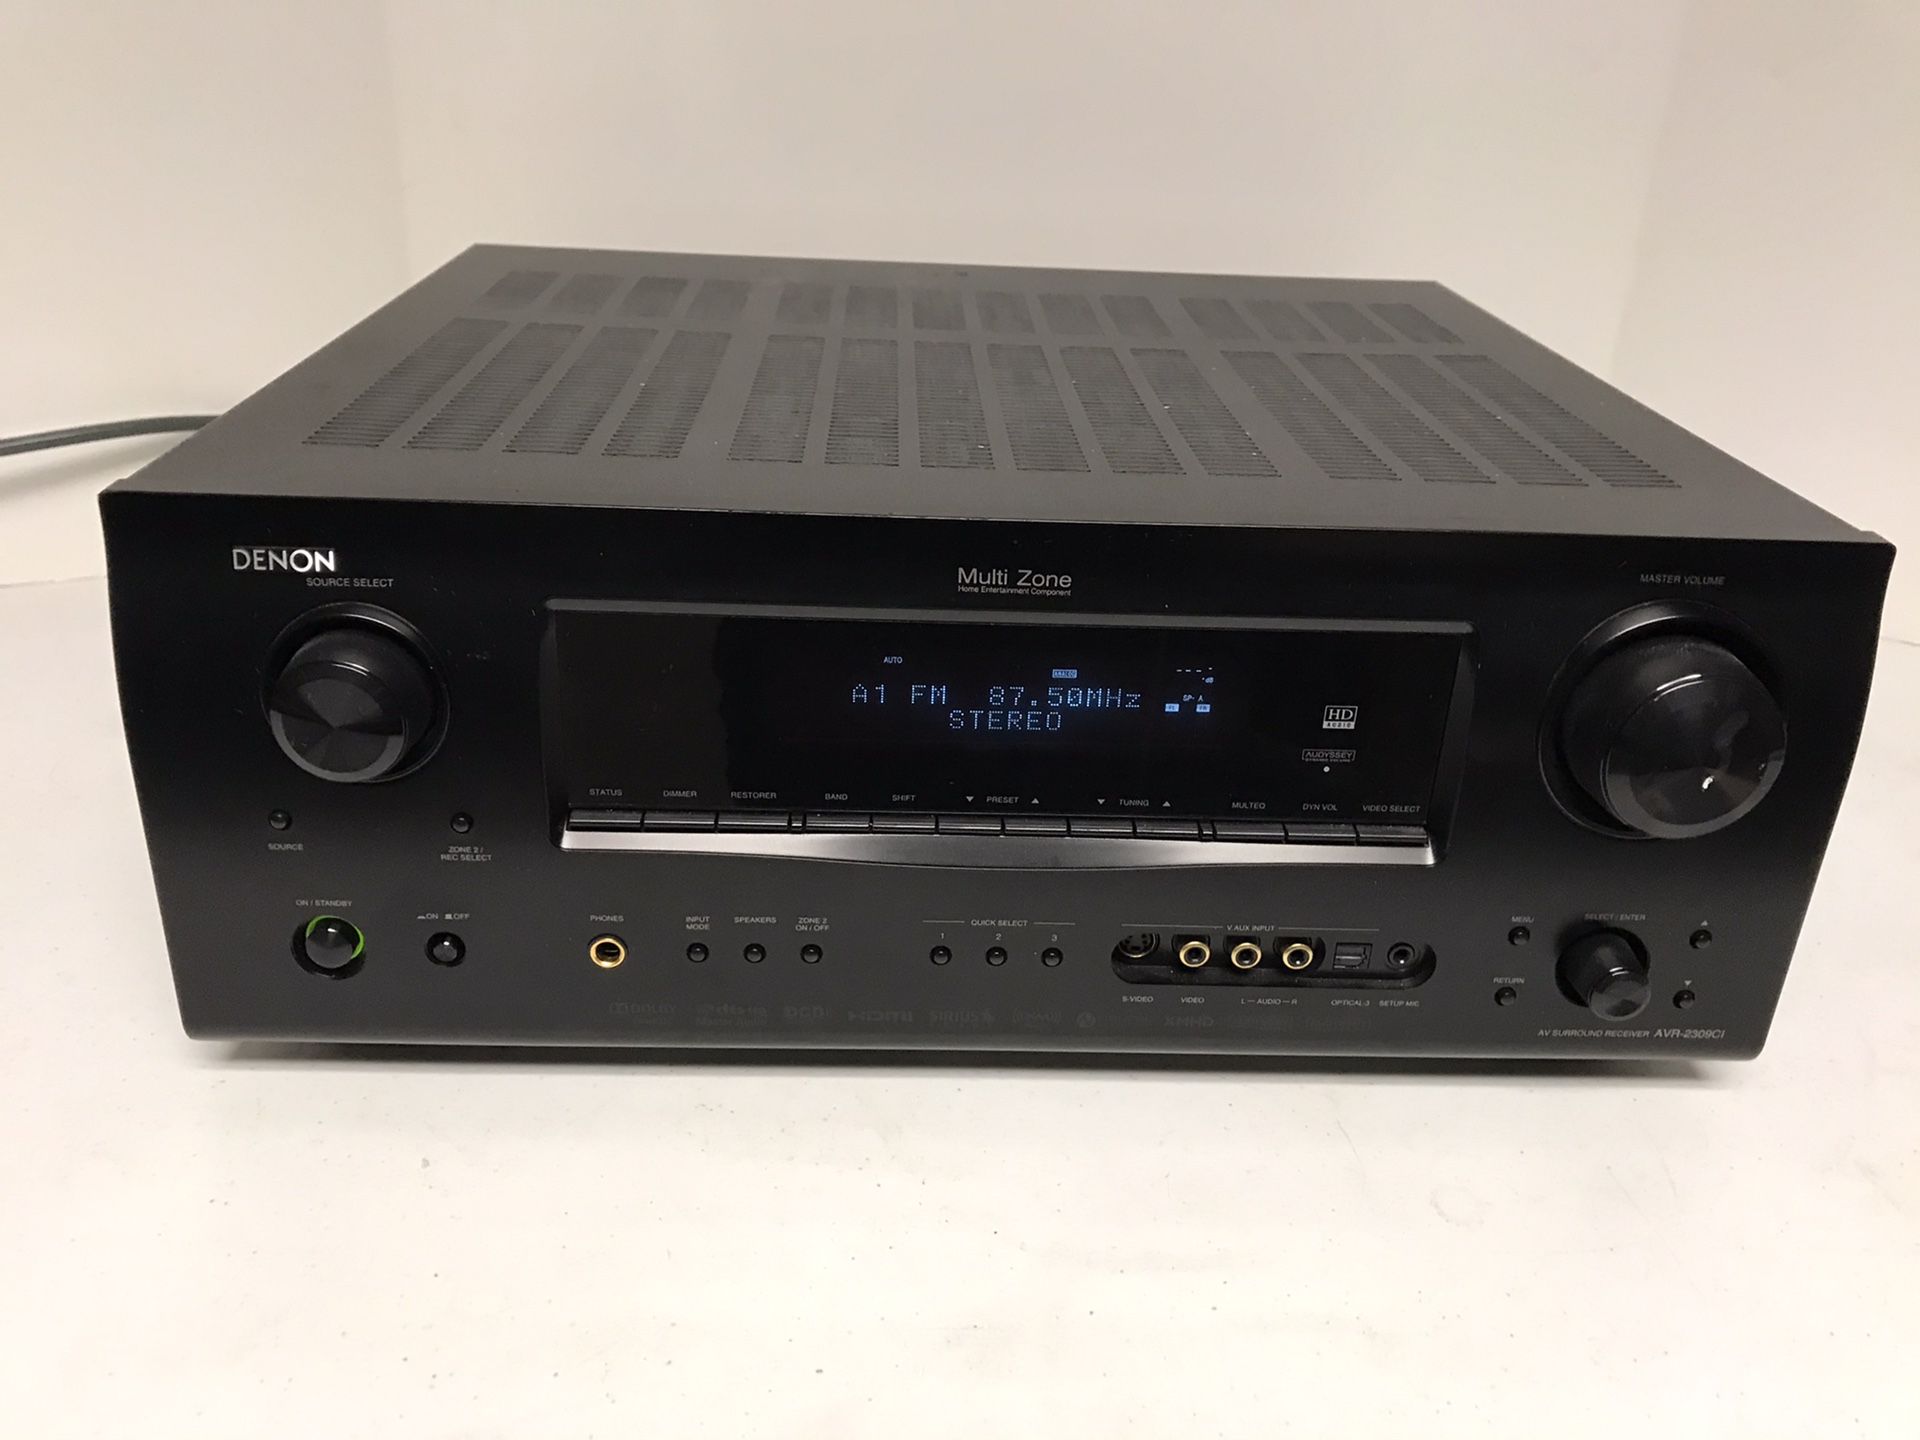 Denon AVR-2308C1 Audio Video Home Theater Surround sound receiver